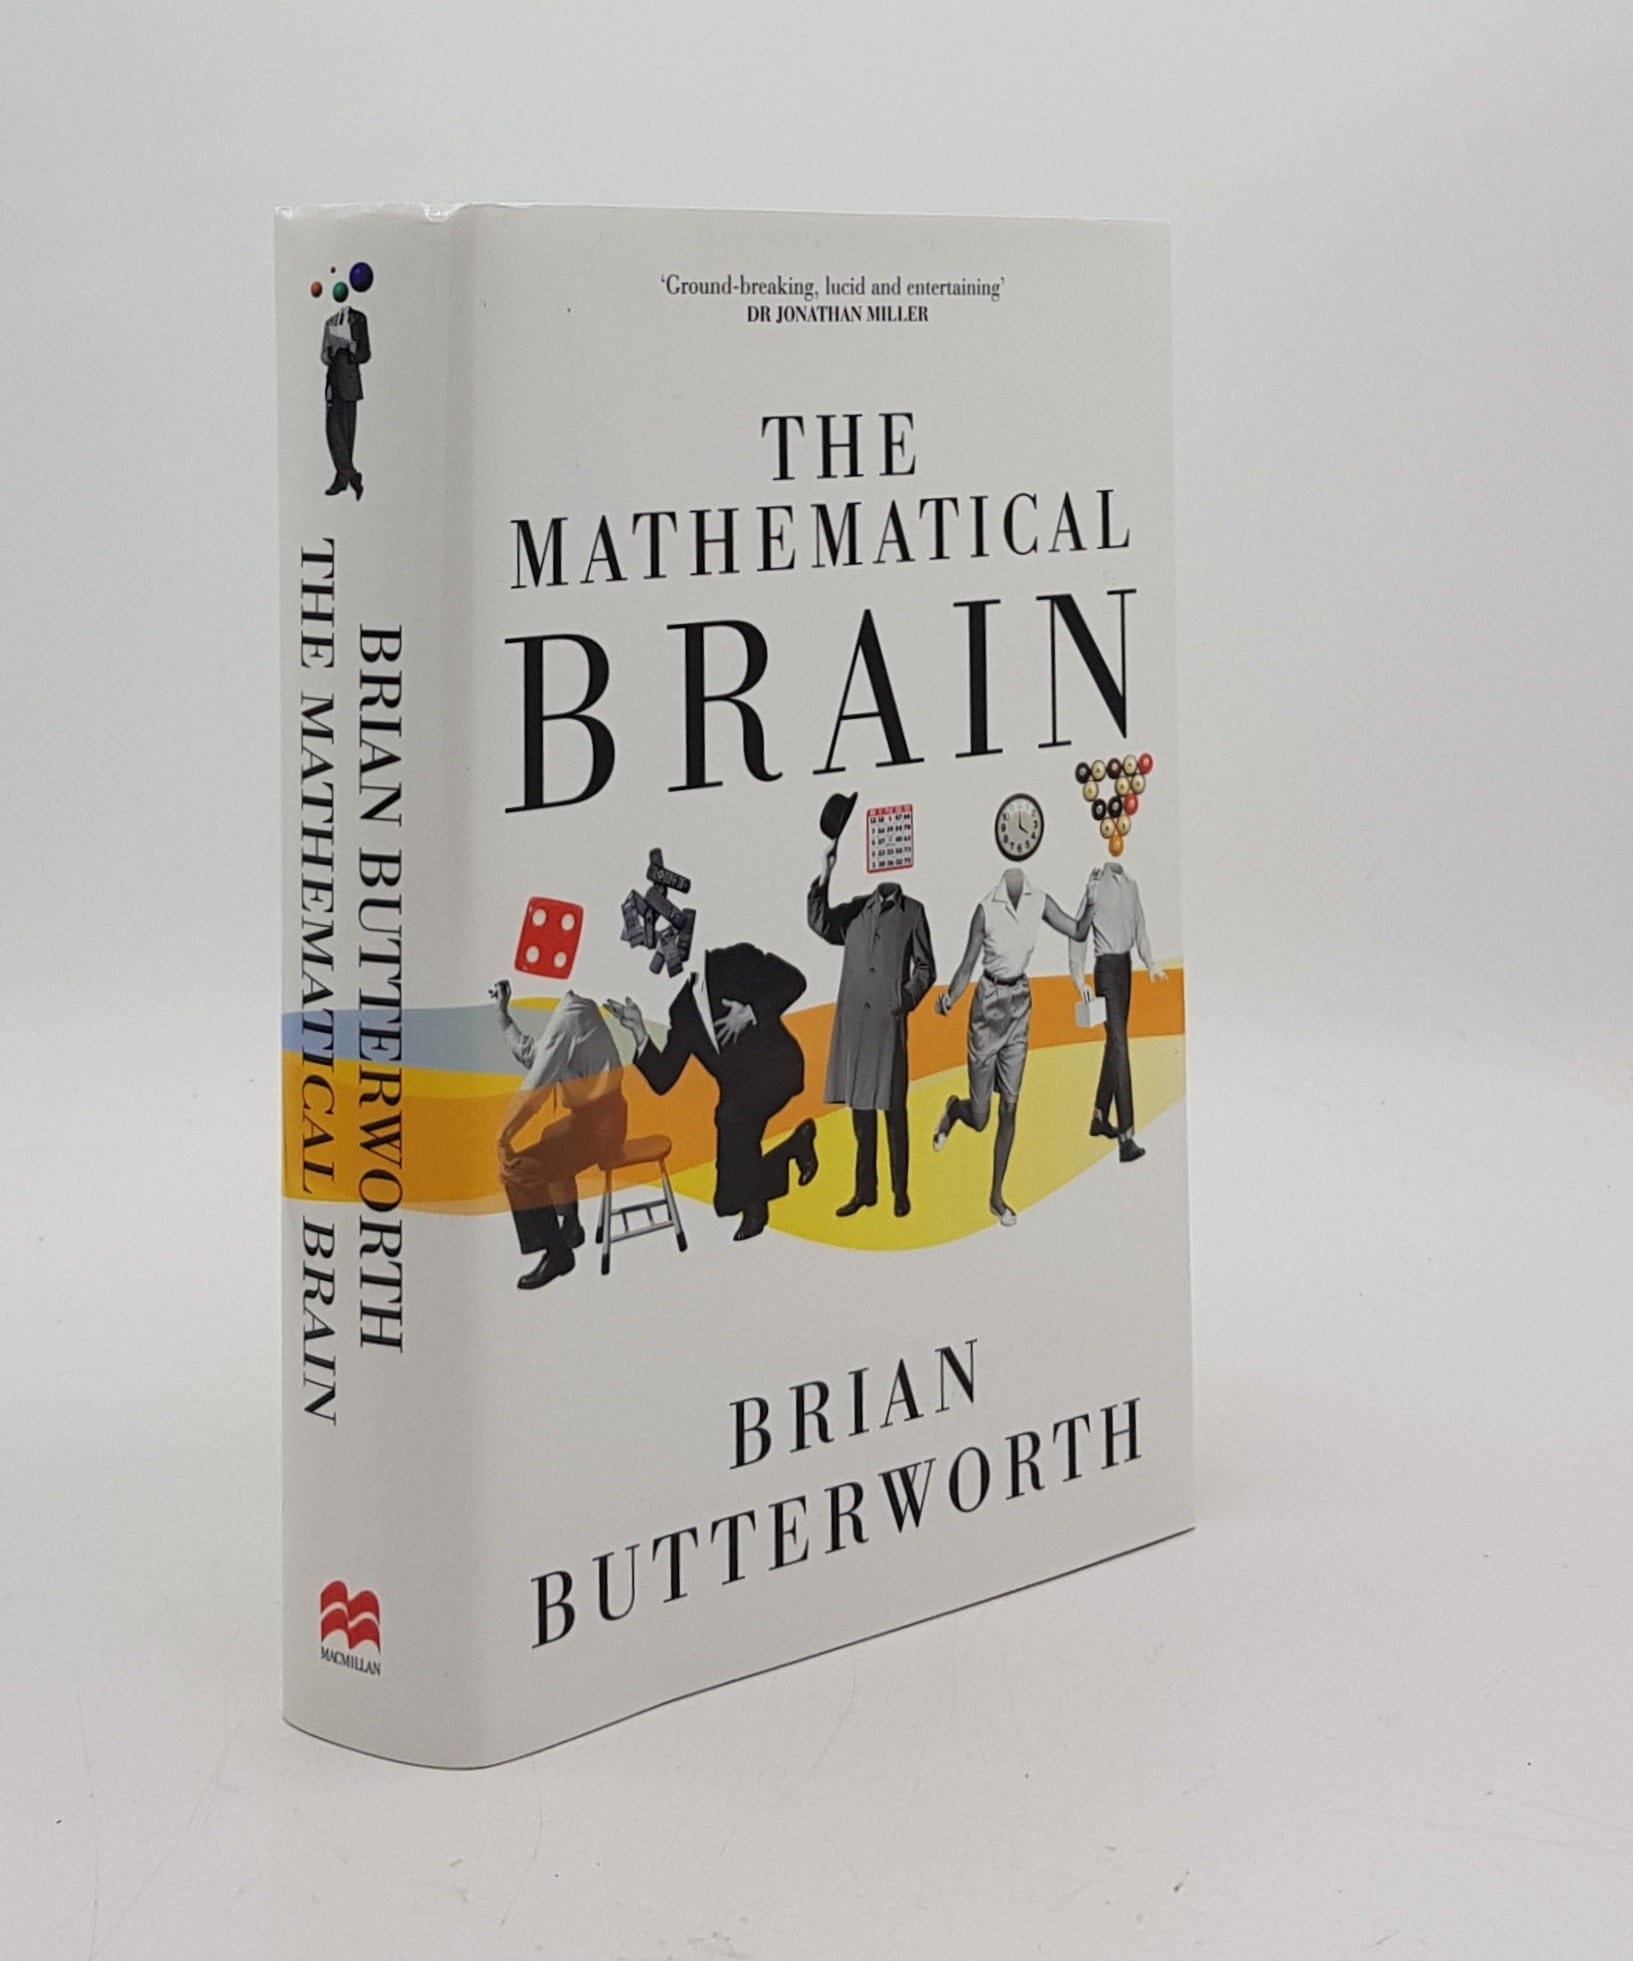 BUTTERWORTH Brian - The Mathematical Brain